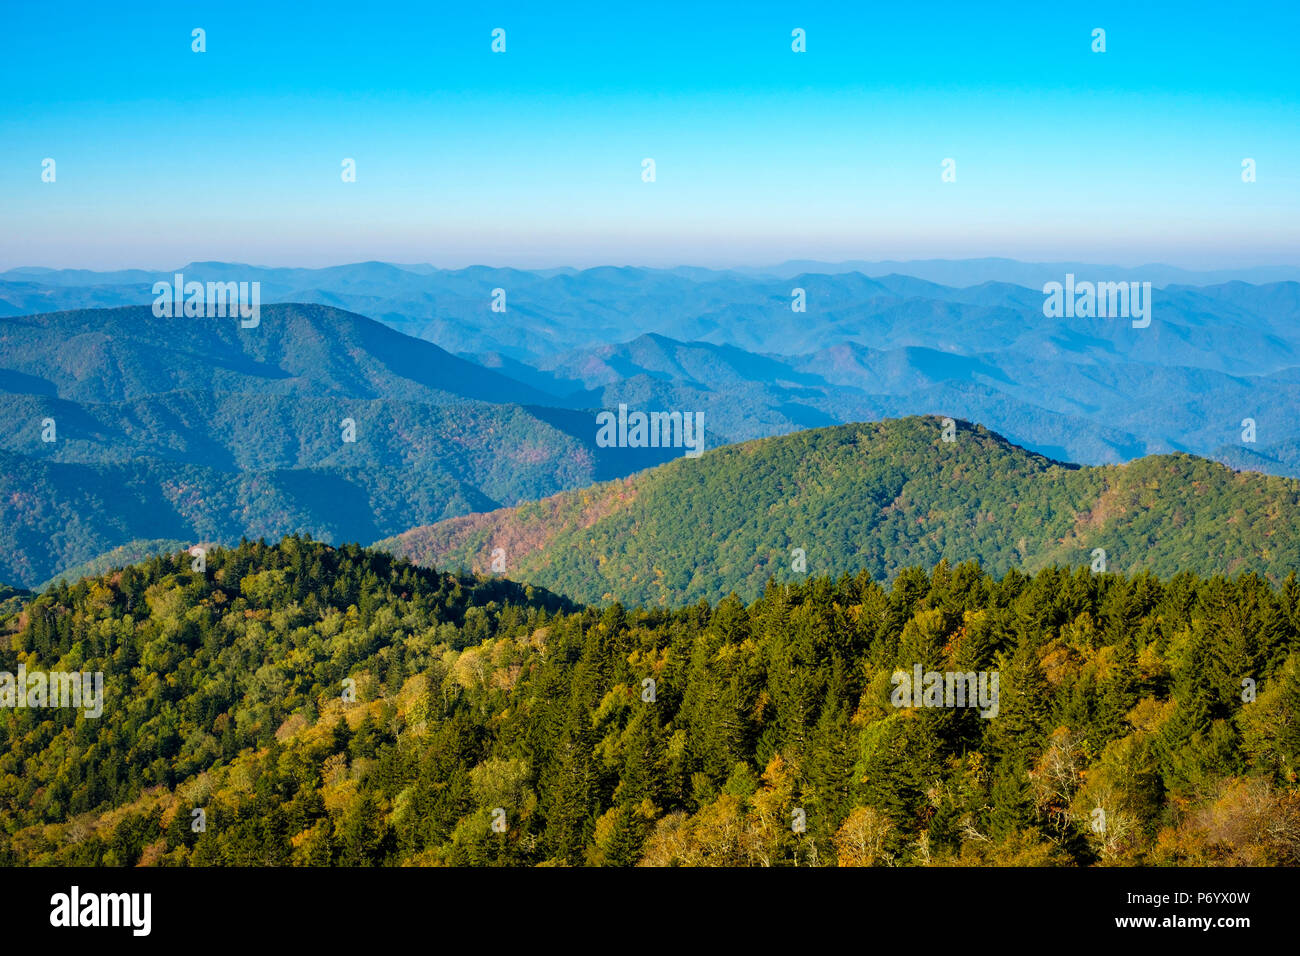 United States, North Carolina, Jackson County. Blue Ridge Mountains from Bear Ridge Gap, Blue Ridge Parkway. Stock Photo